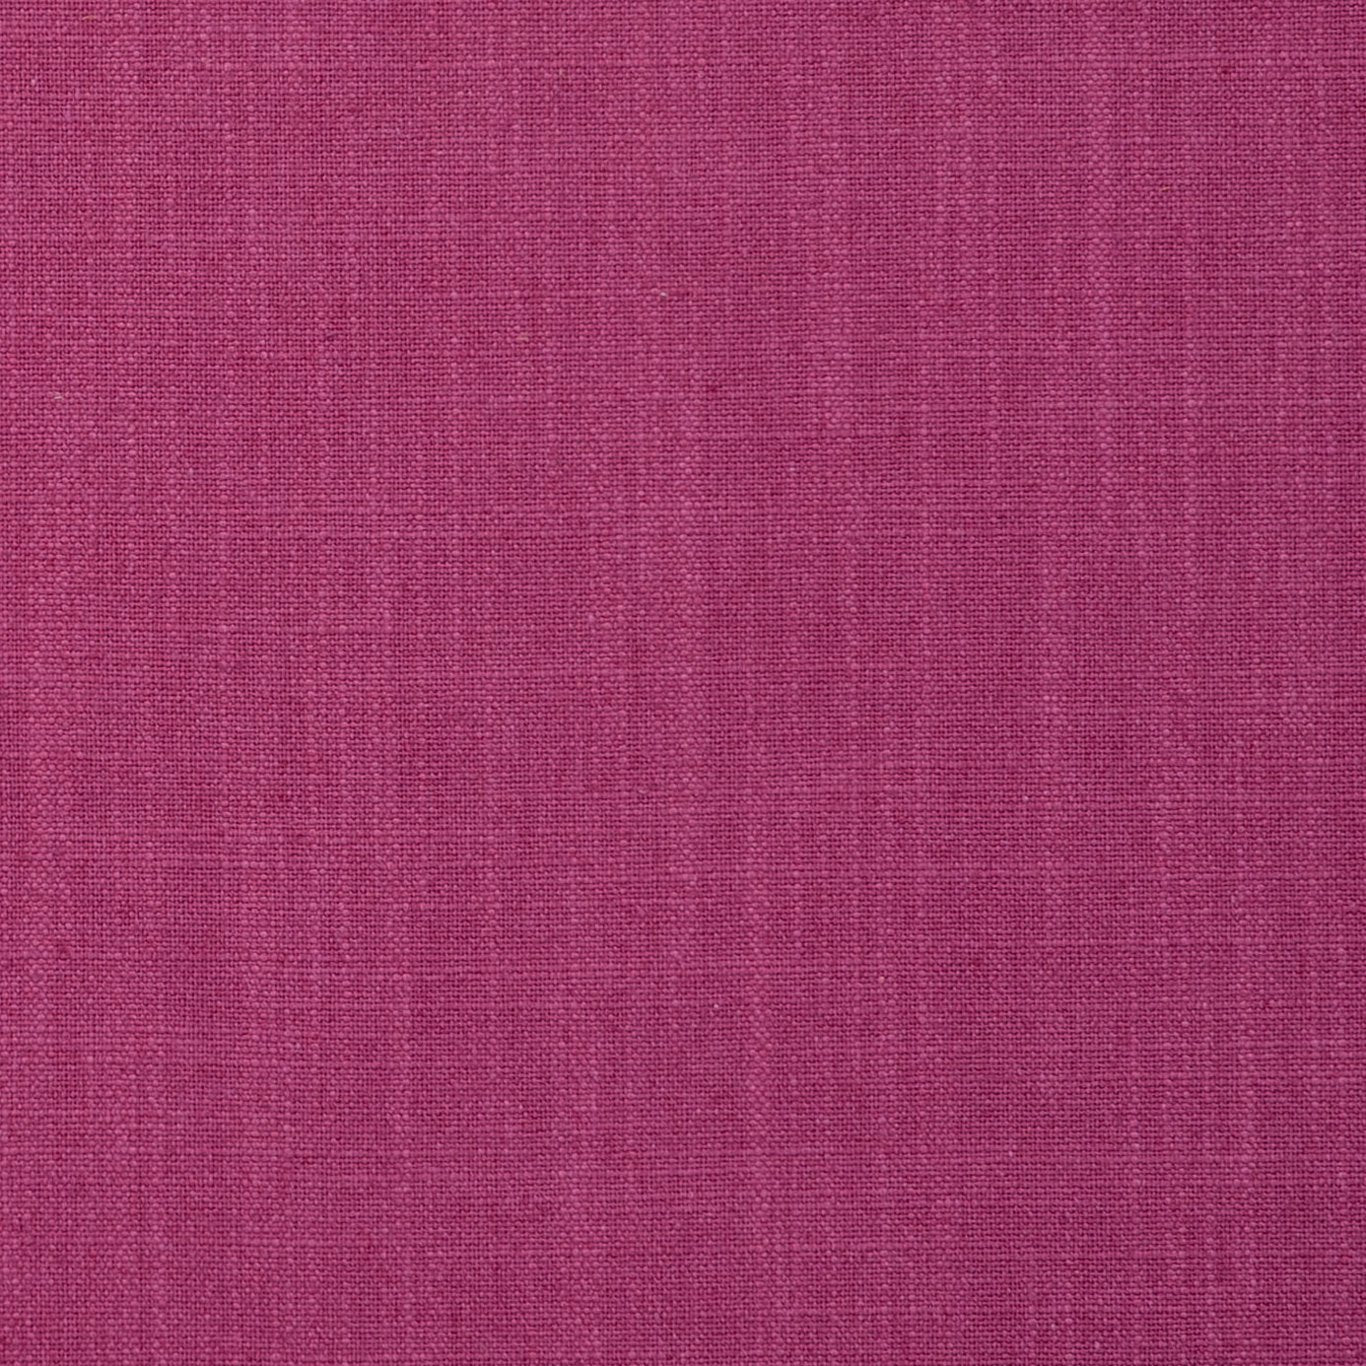 Easton Fabric by Clarke & Clarke - F0736/09 - Raspberry